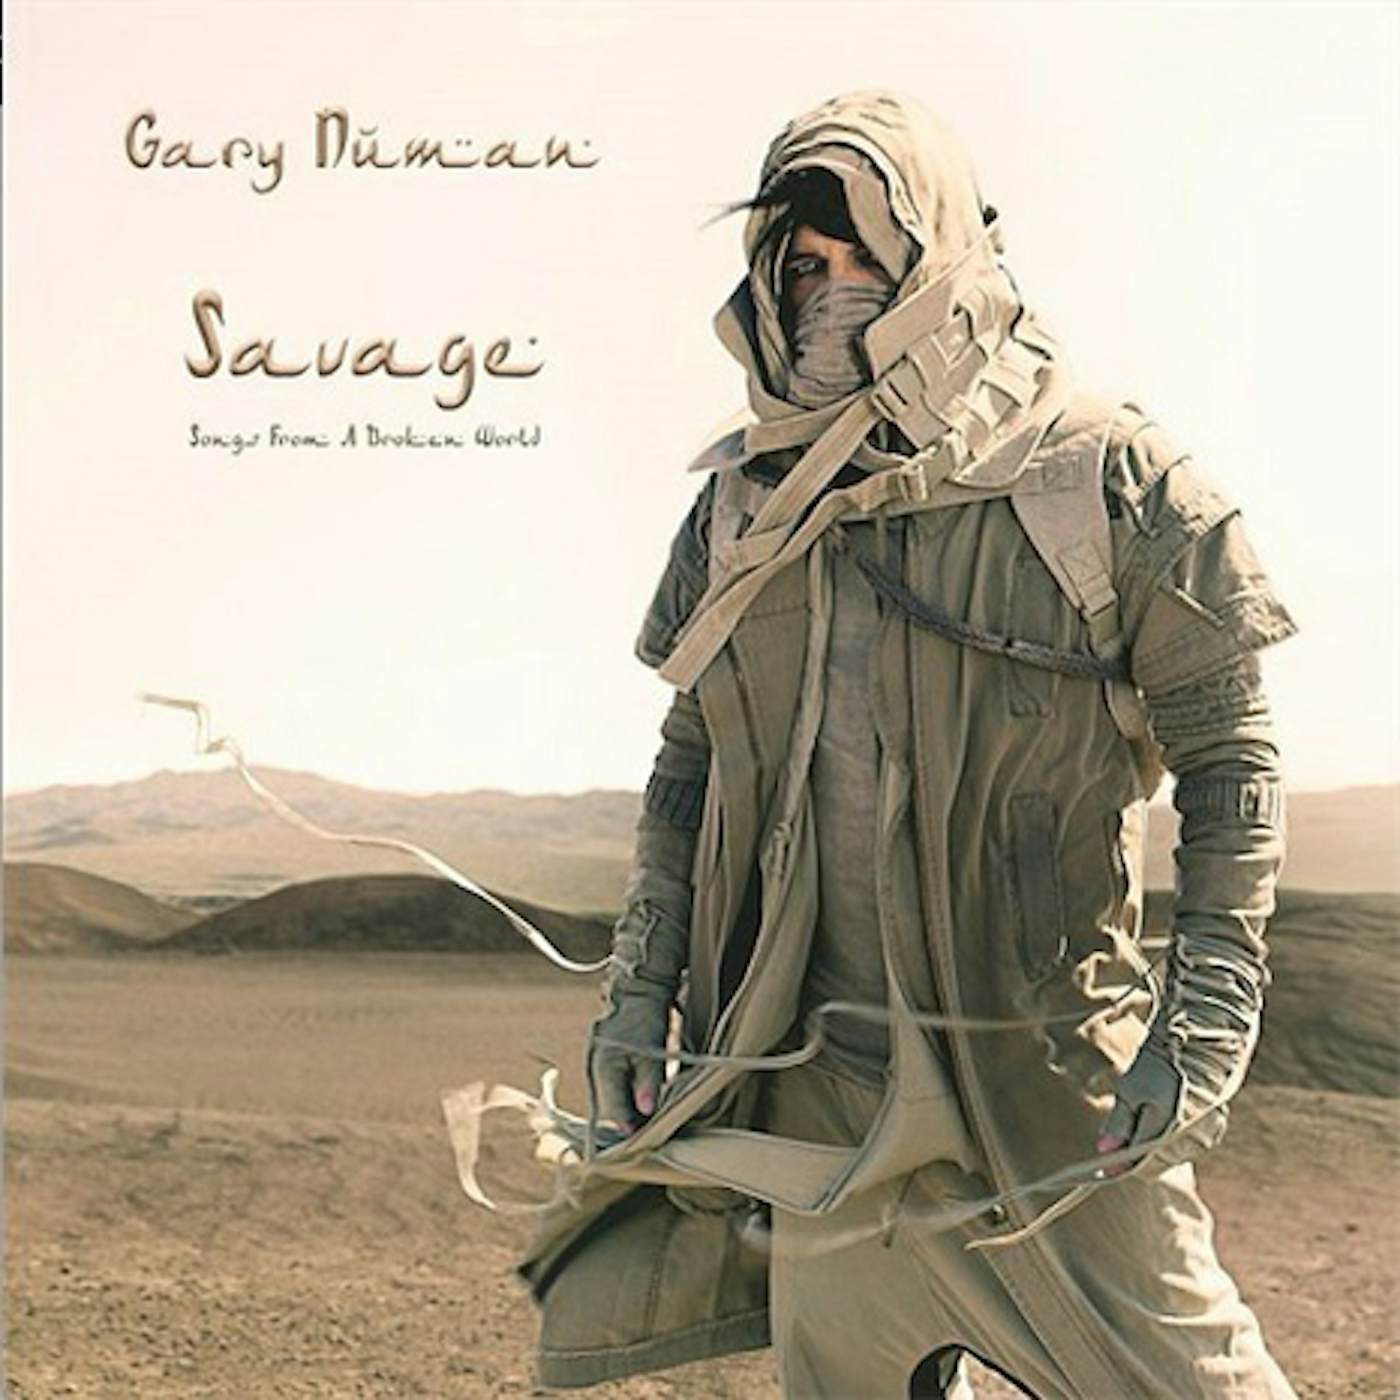 Gary Numan Savage (Songs from a Broken World) Vinyl Record